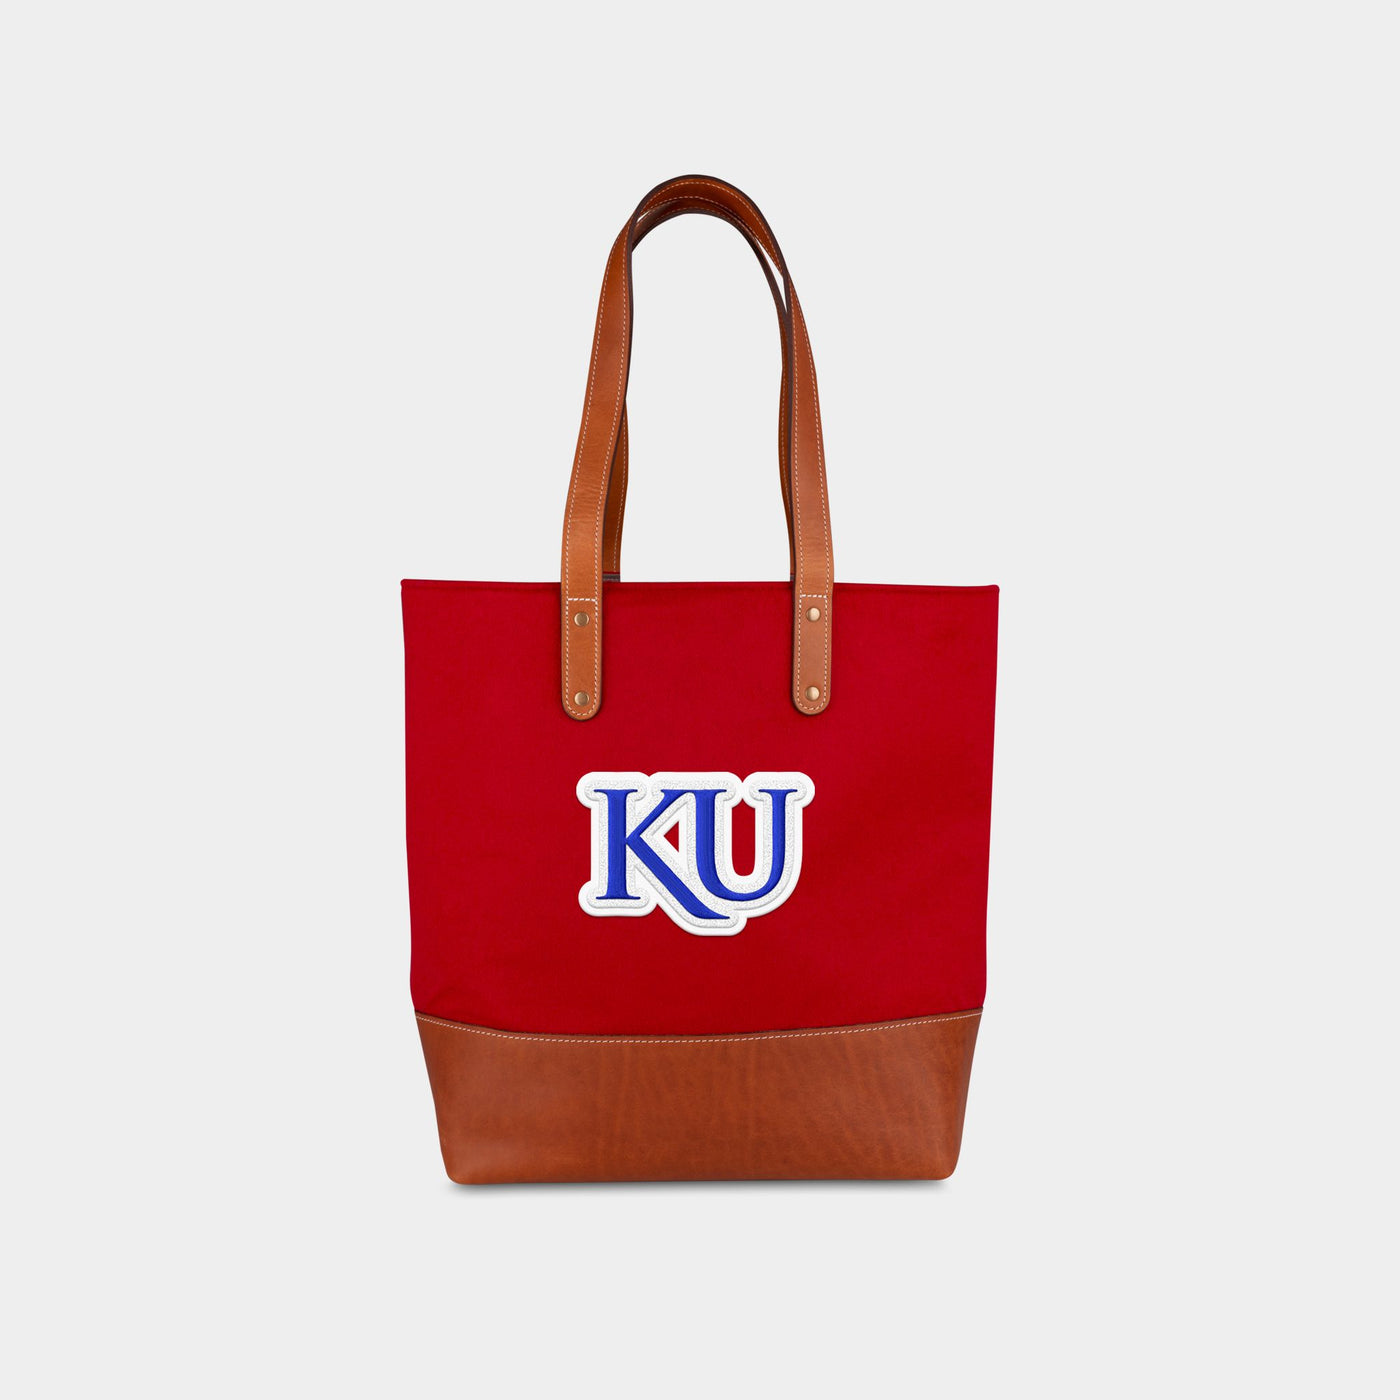 Kansas Jayhawks "KU" Tote Bag